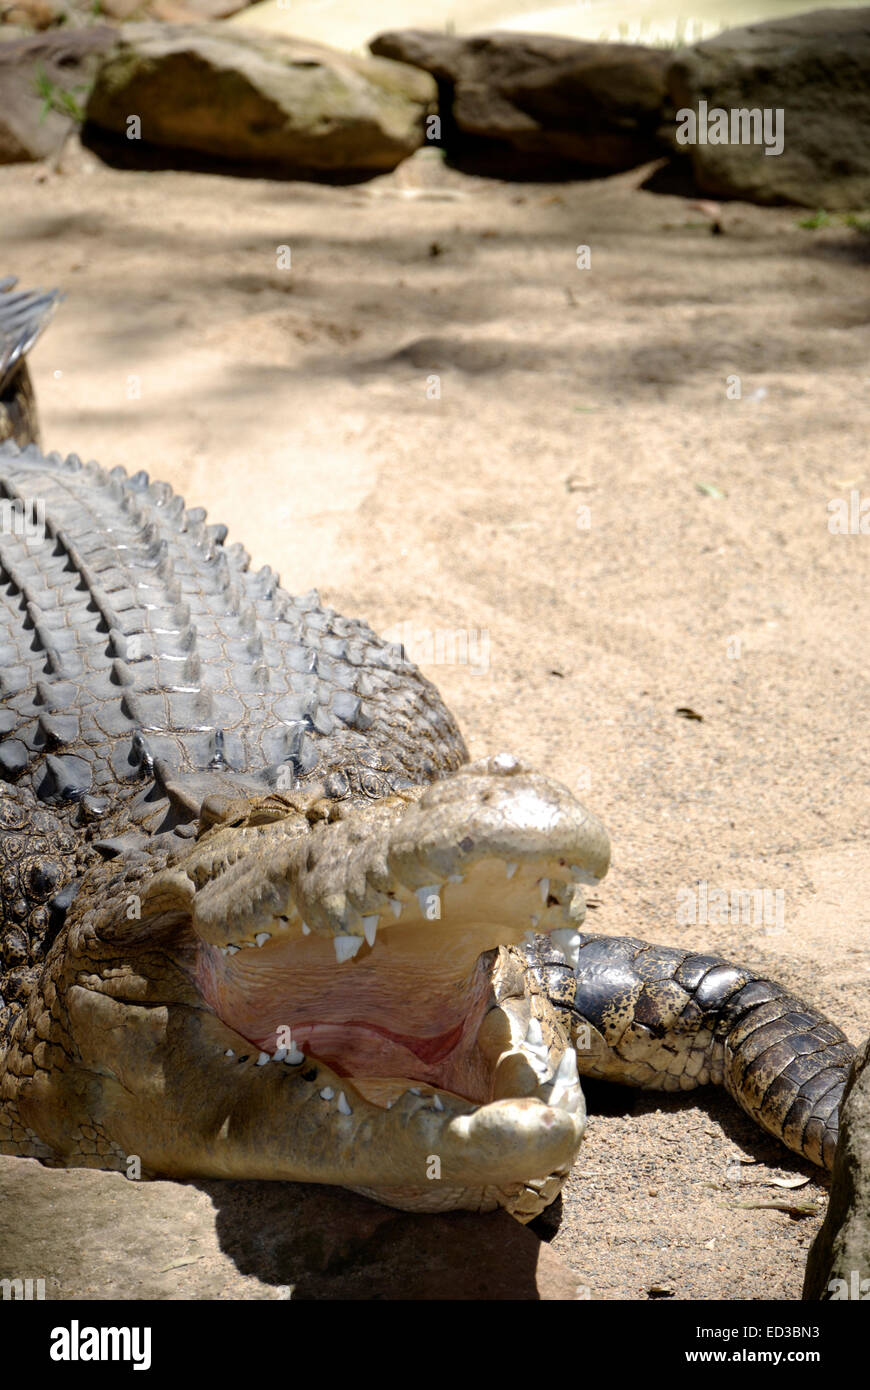 Einzelnes Krokodil. Foto war taked im Featherdale Wildlife Park in Sydney, Australien. Stockfoto